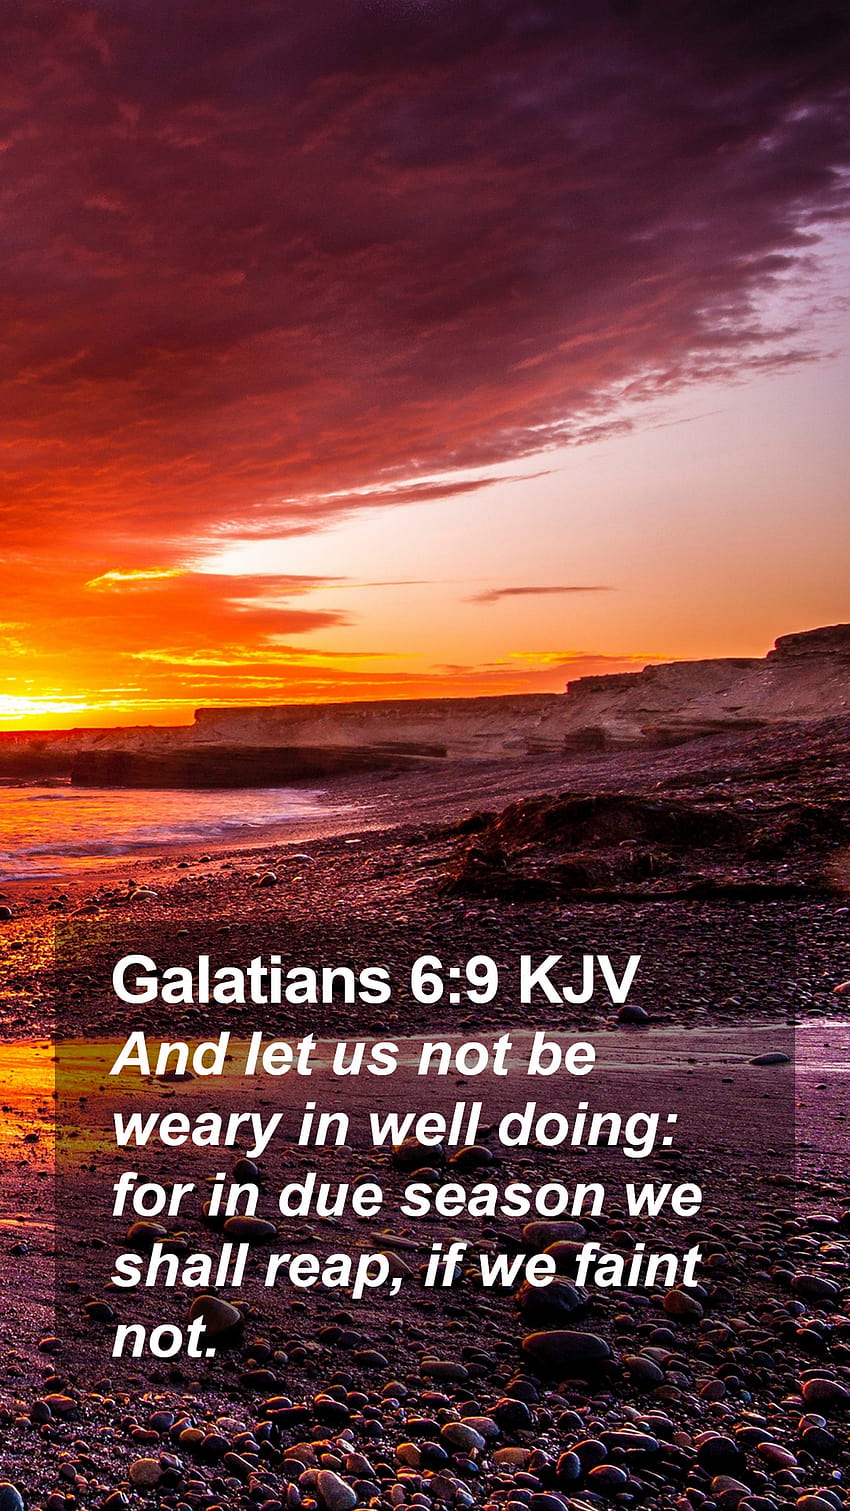 Do You Feel God's Grace and Peace? Galatians 1:3–5 - YouTube